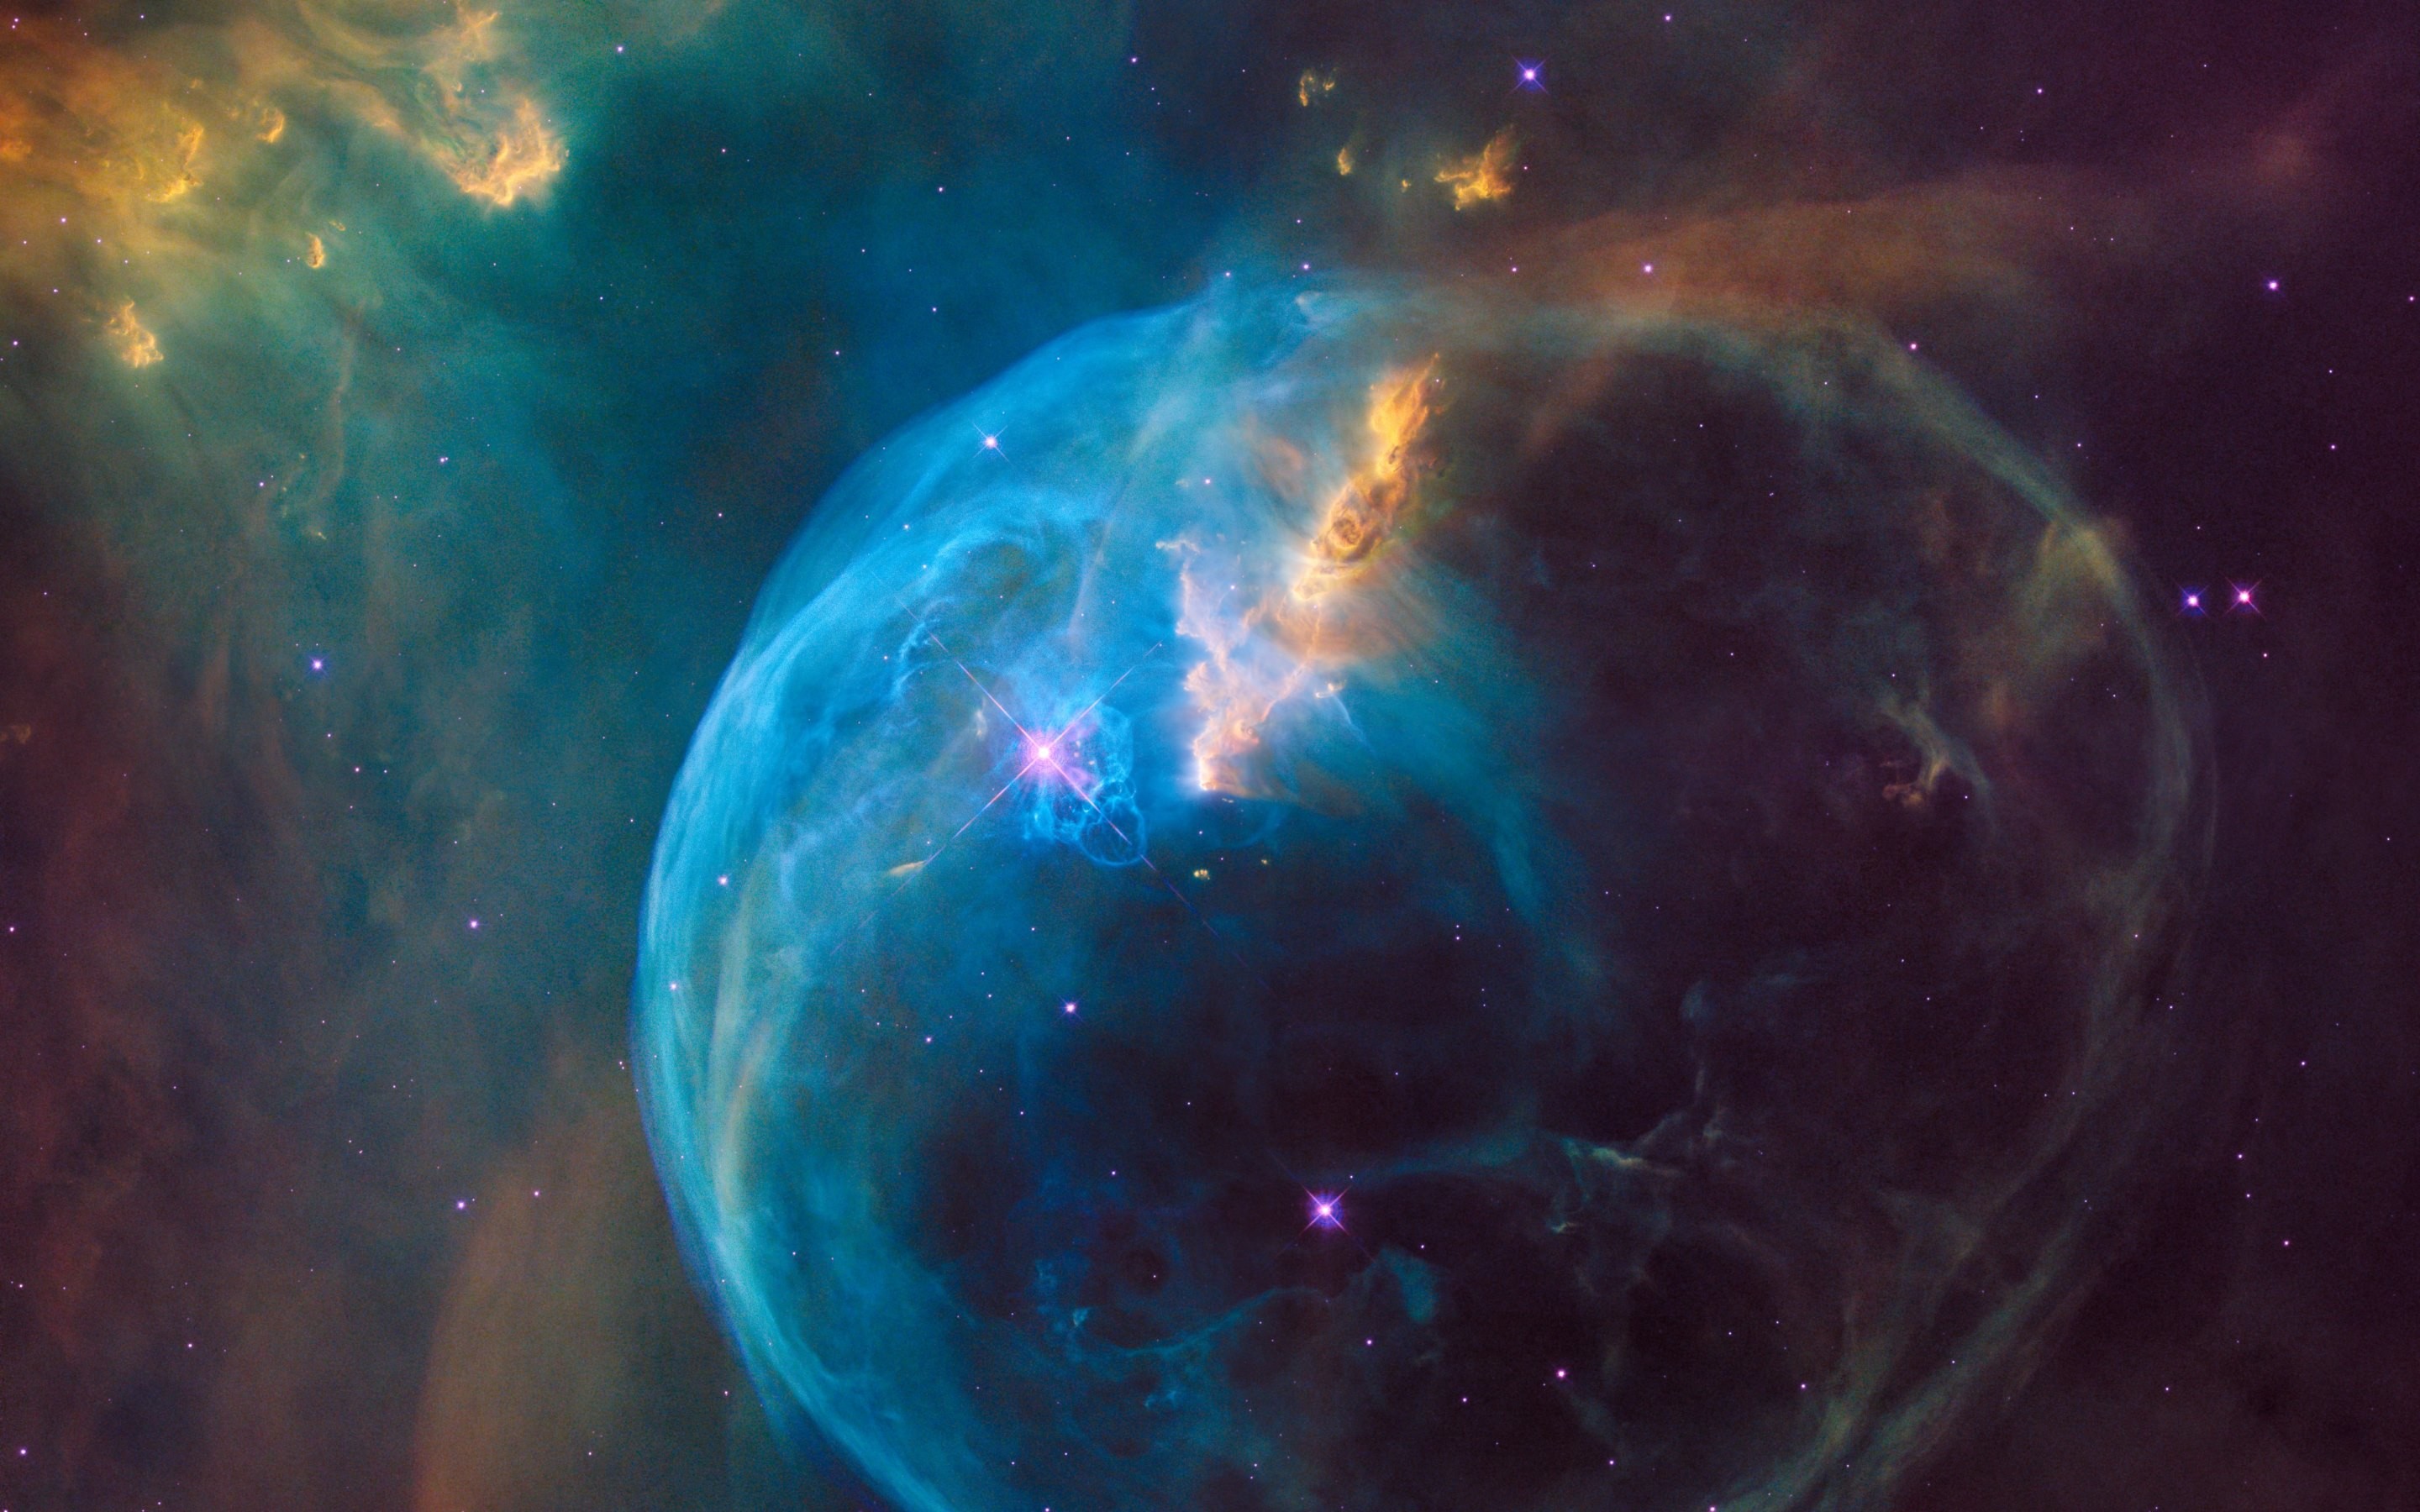 2880x1800 4K HD Wallpaper: The Bubble Nebula. "